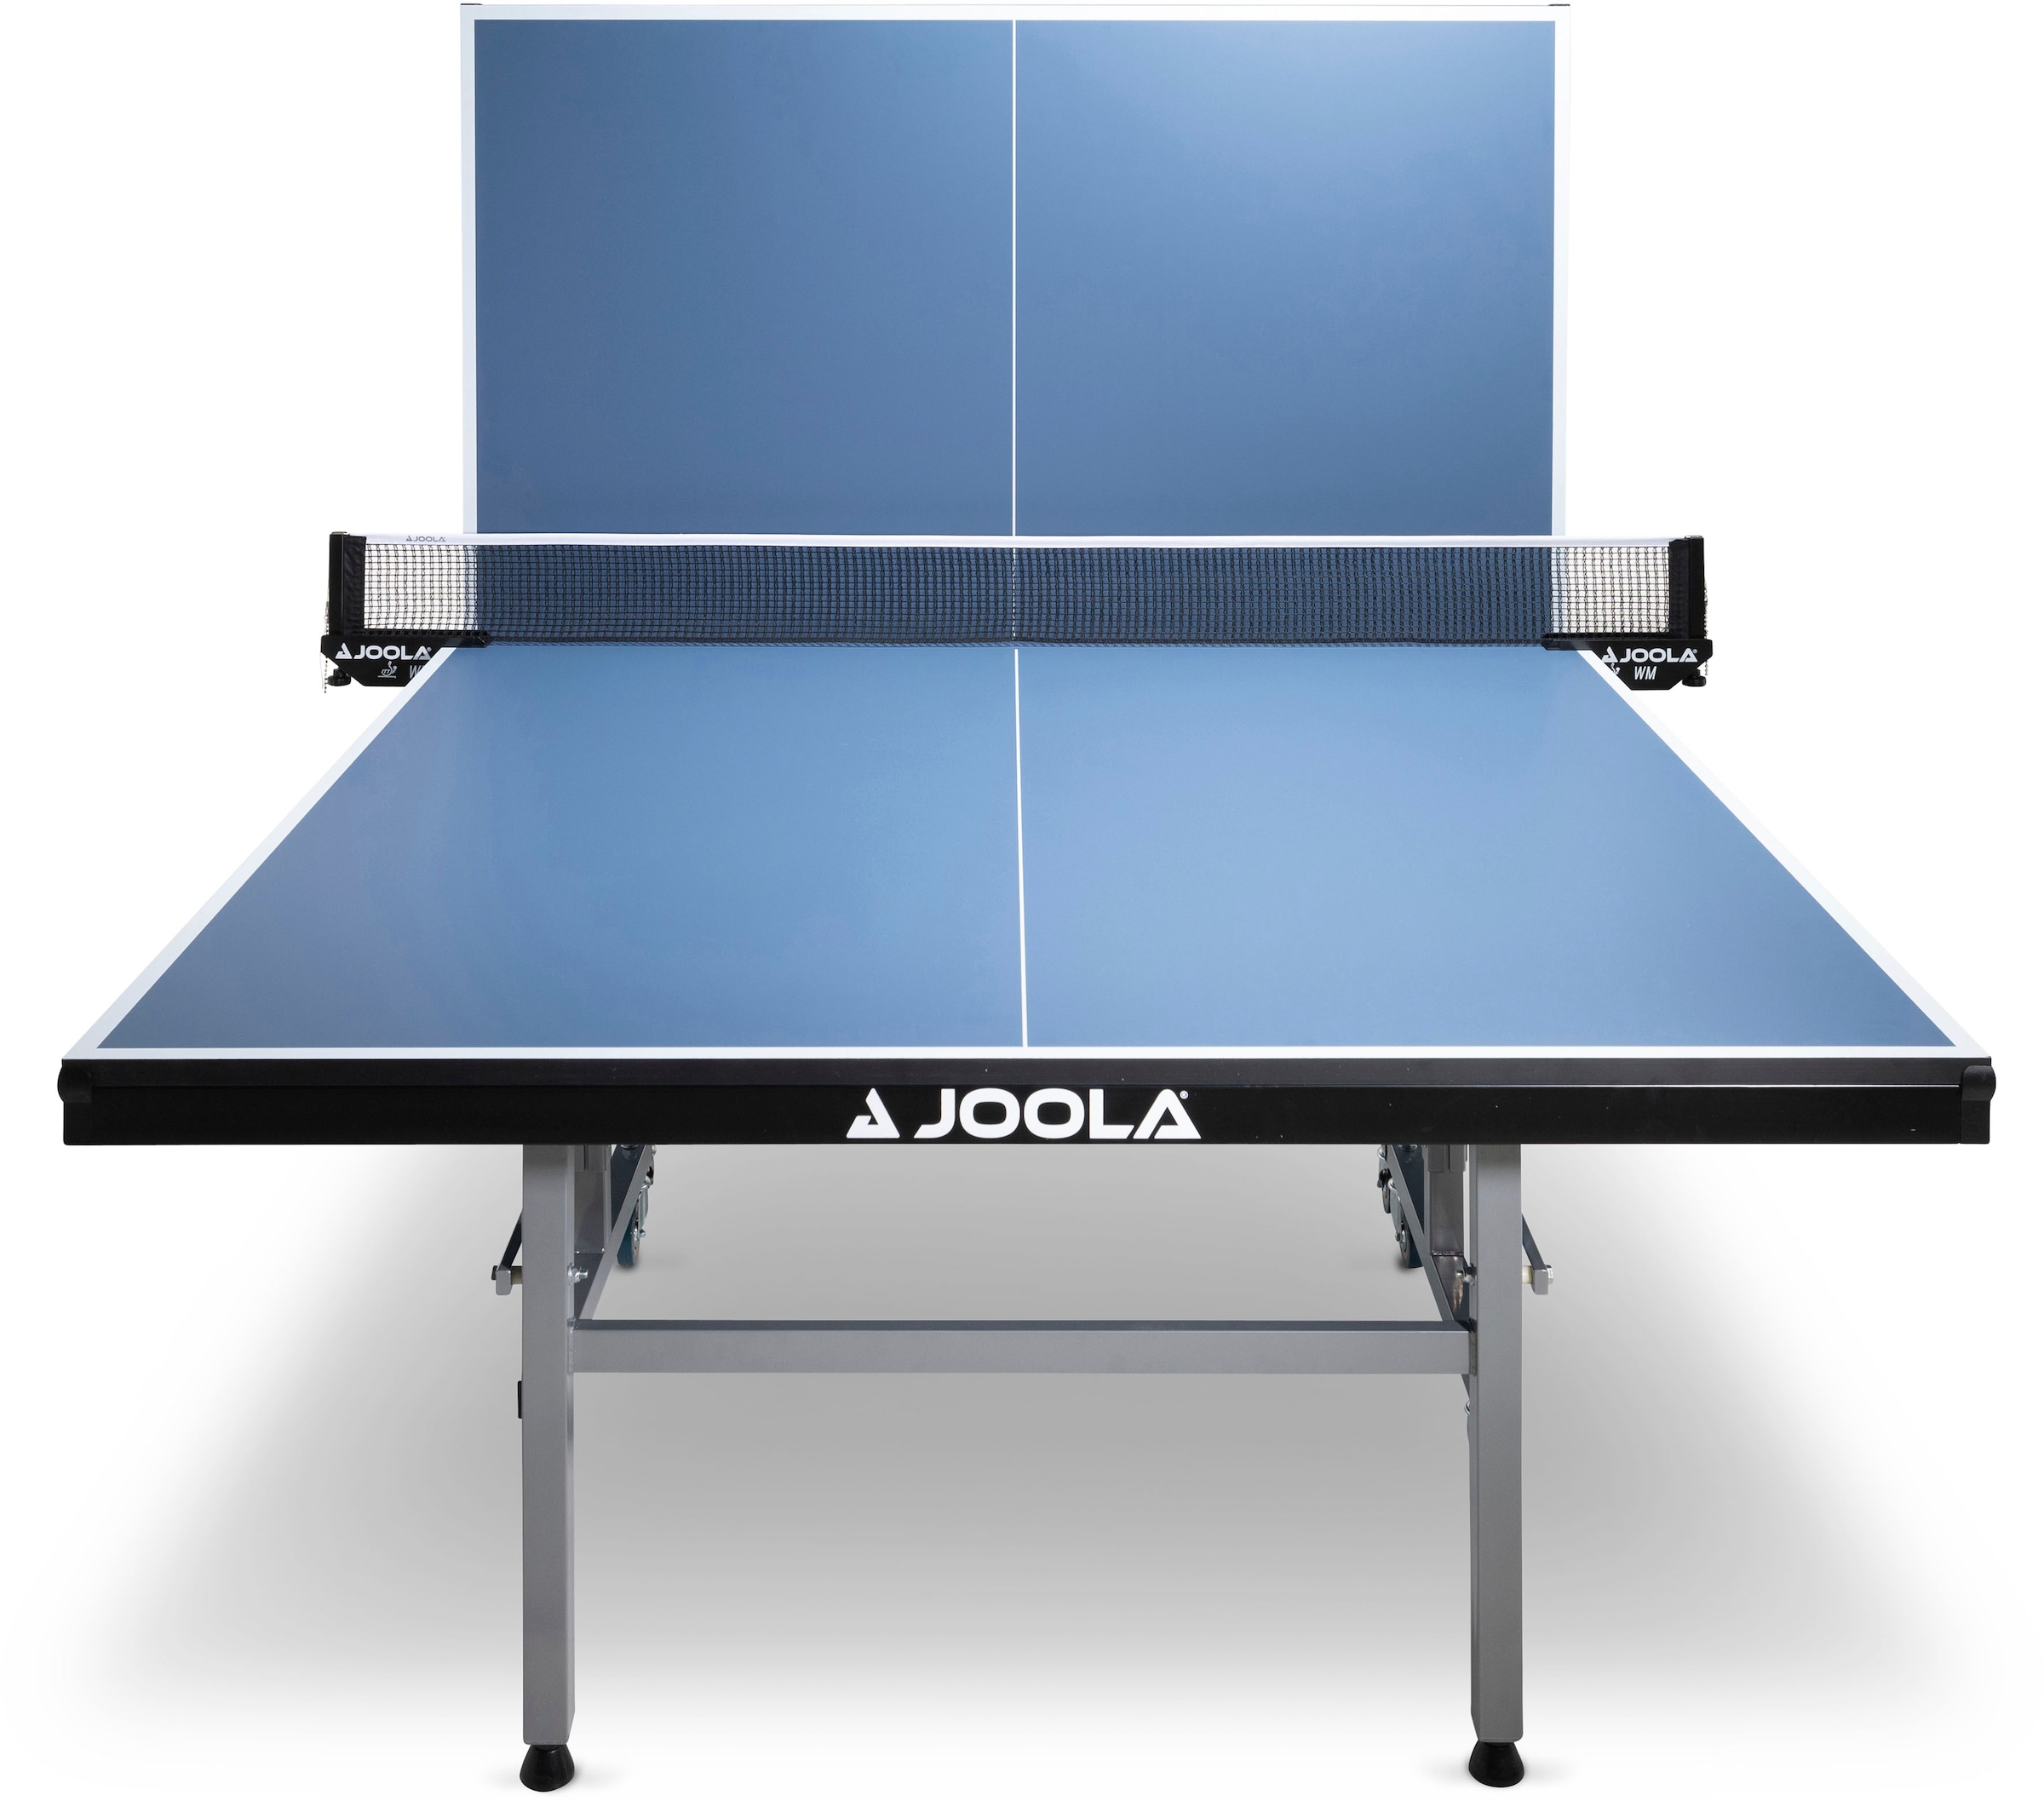 Joola Tischtennisplatte »JOOLA Indoor-Tischtennisplatte World Cup«